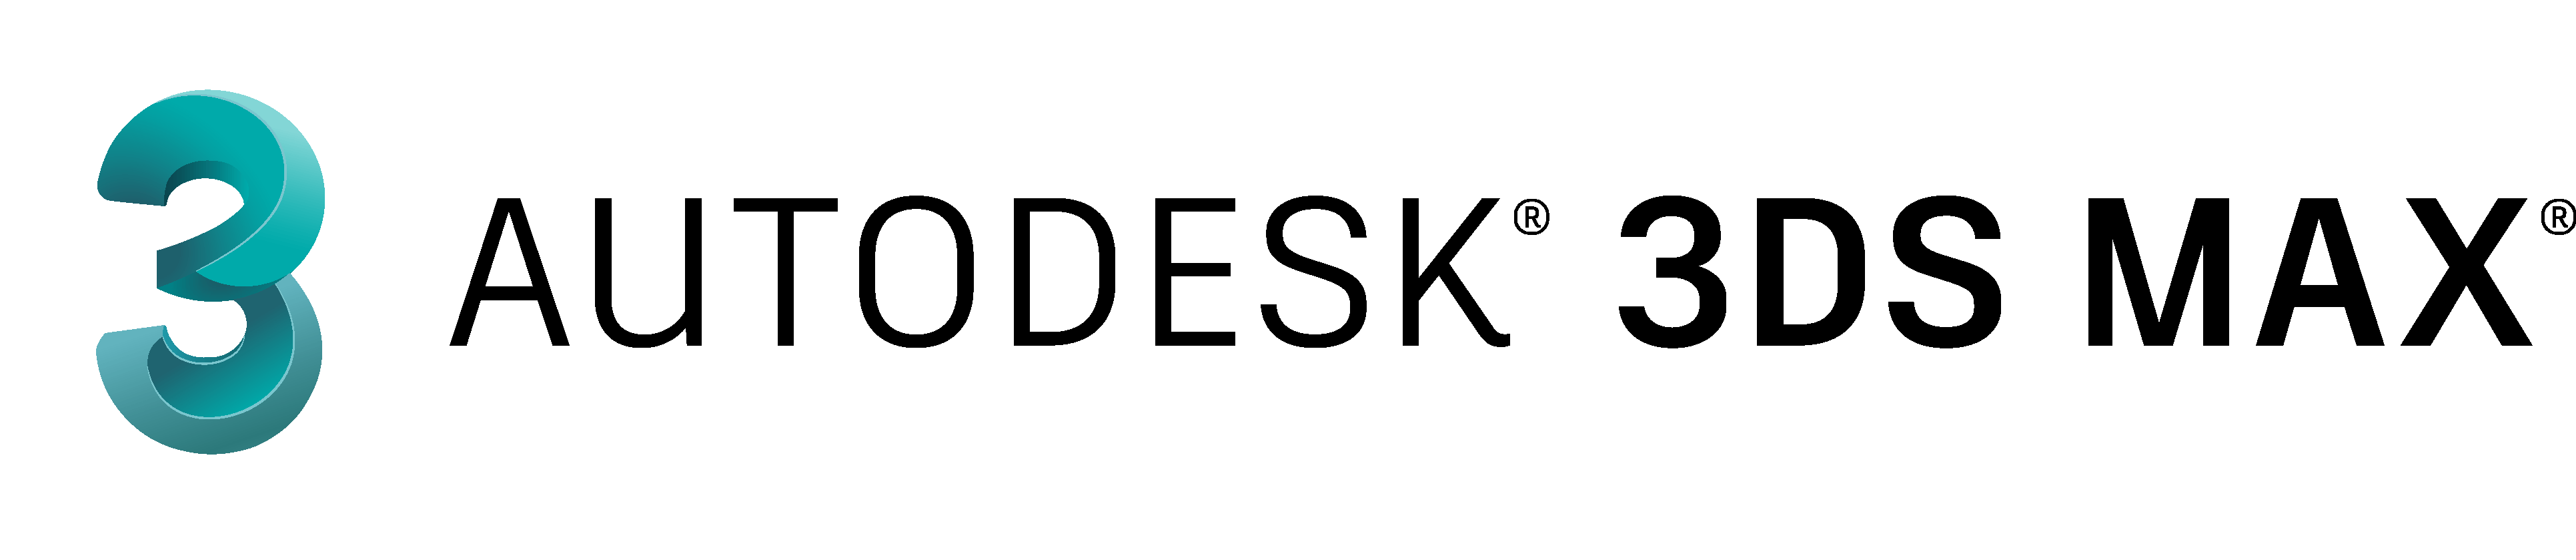 Autodesk 3d Max logo. 3ds Max логотип. Autodesk 3ds Max лого. Значок 3ds Max 2021. Интернет операция без 3ds